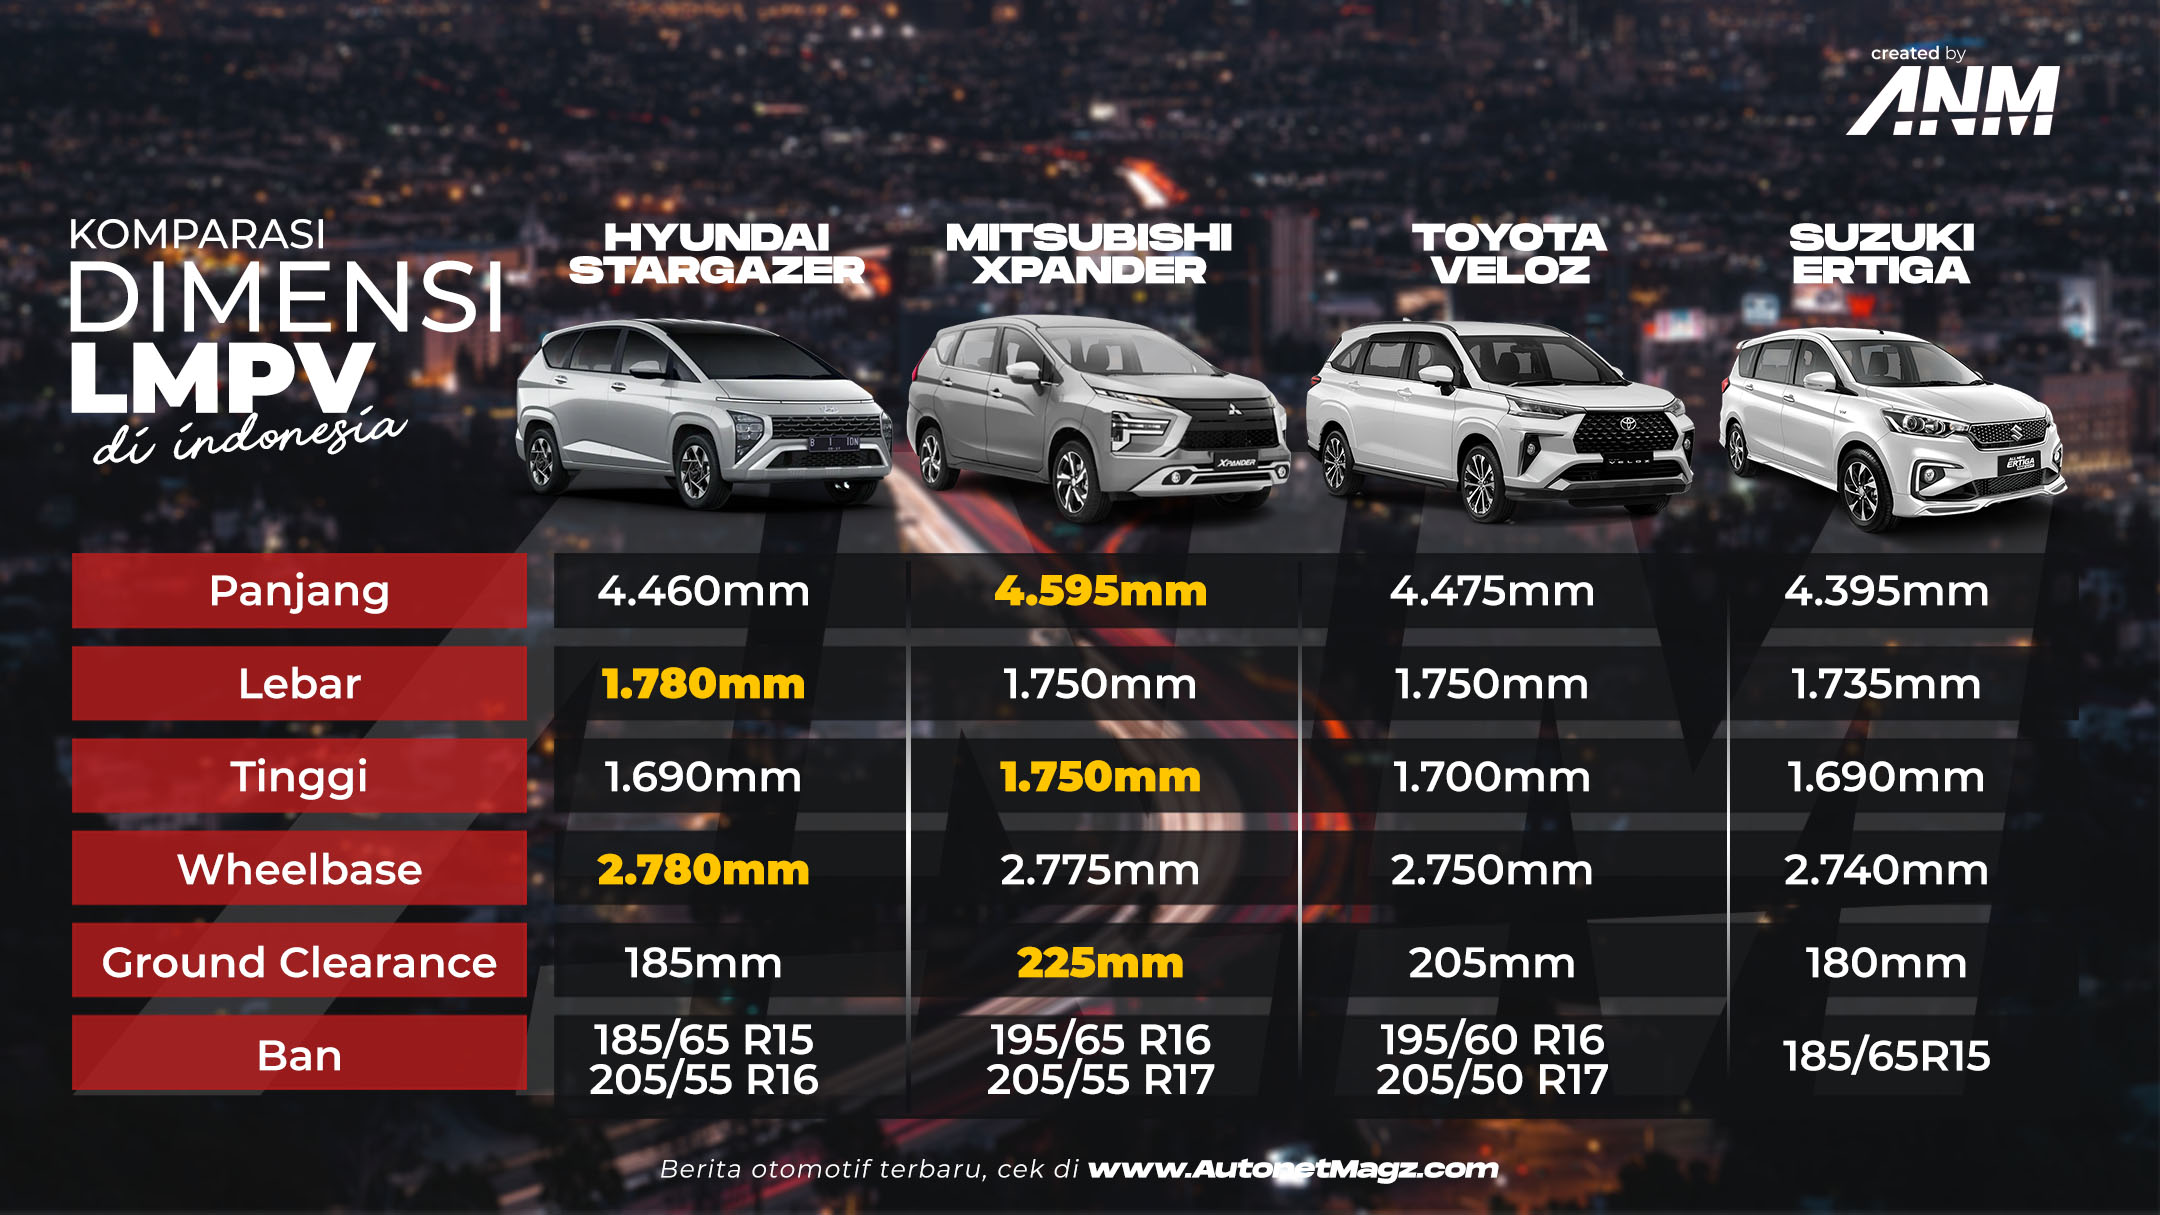 Berita, perbandingan-dimensi-stargazer-vs-xpander-vs-veloz-vs-ertiga: Inilah Perbandingan Dimensi Hyundai Stargazer & Rivalnya!